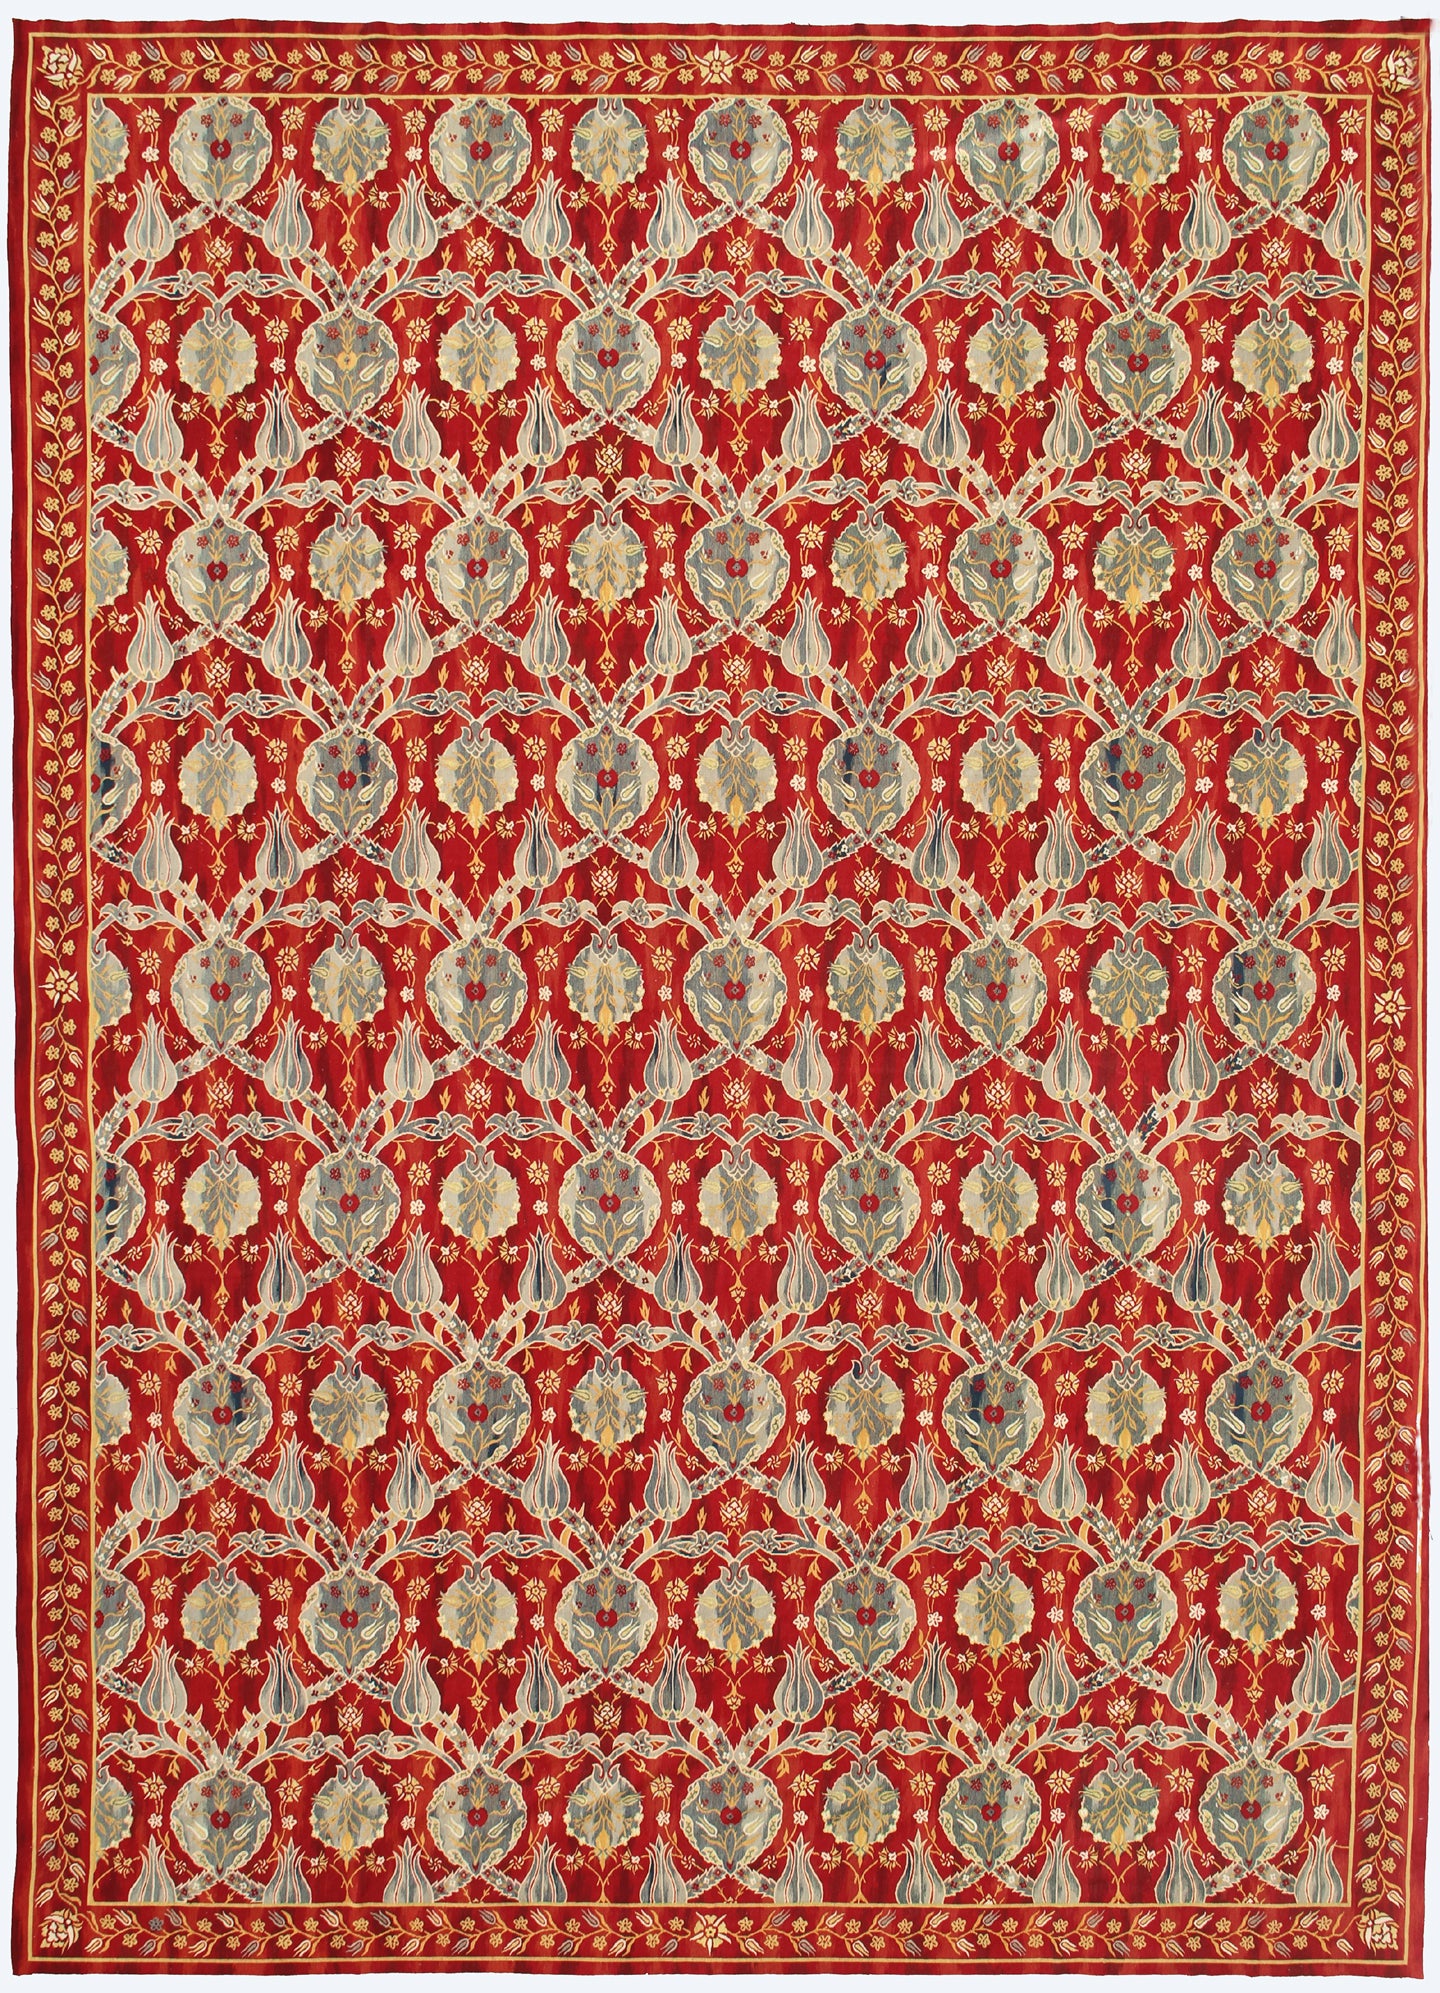 12x18 Red Aubusson Ottoman Design